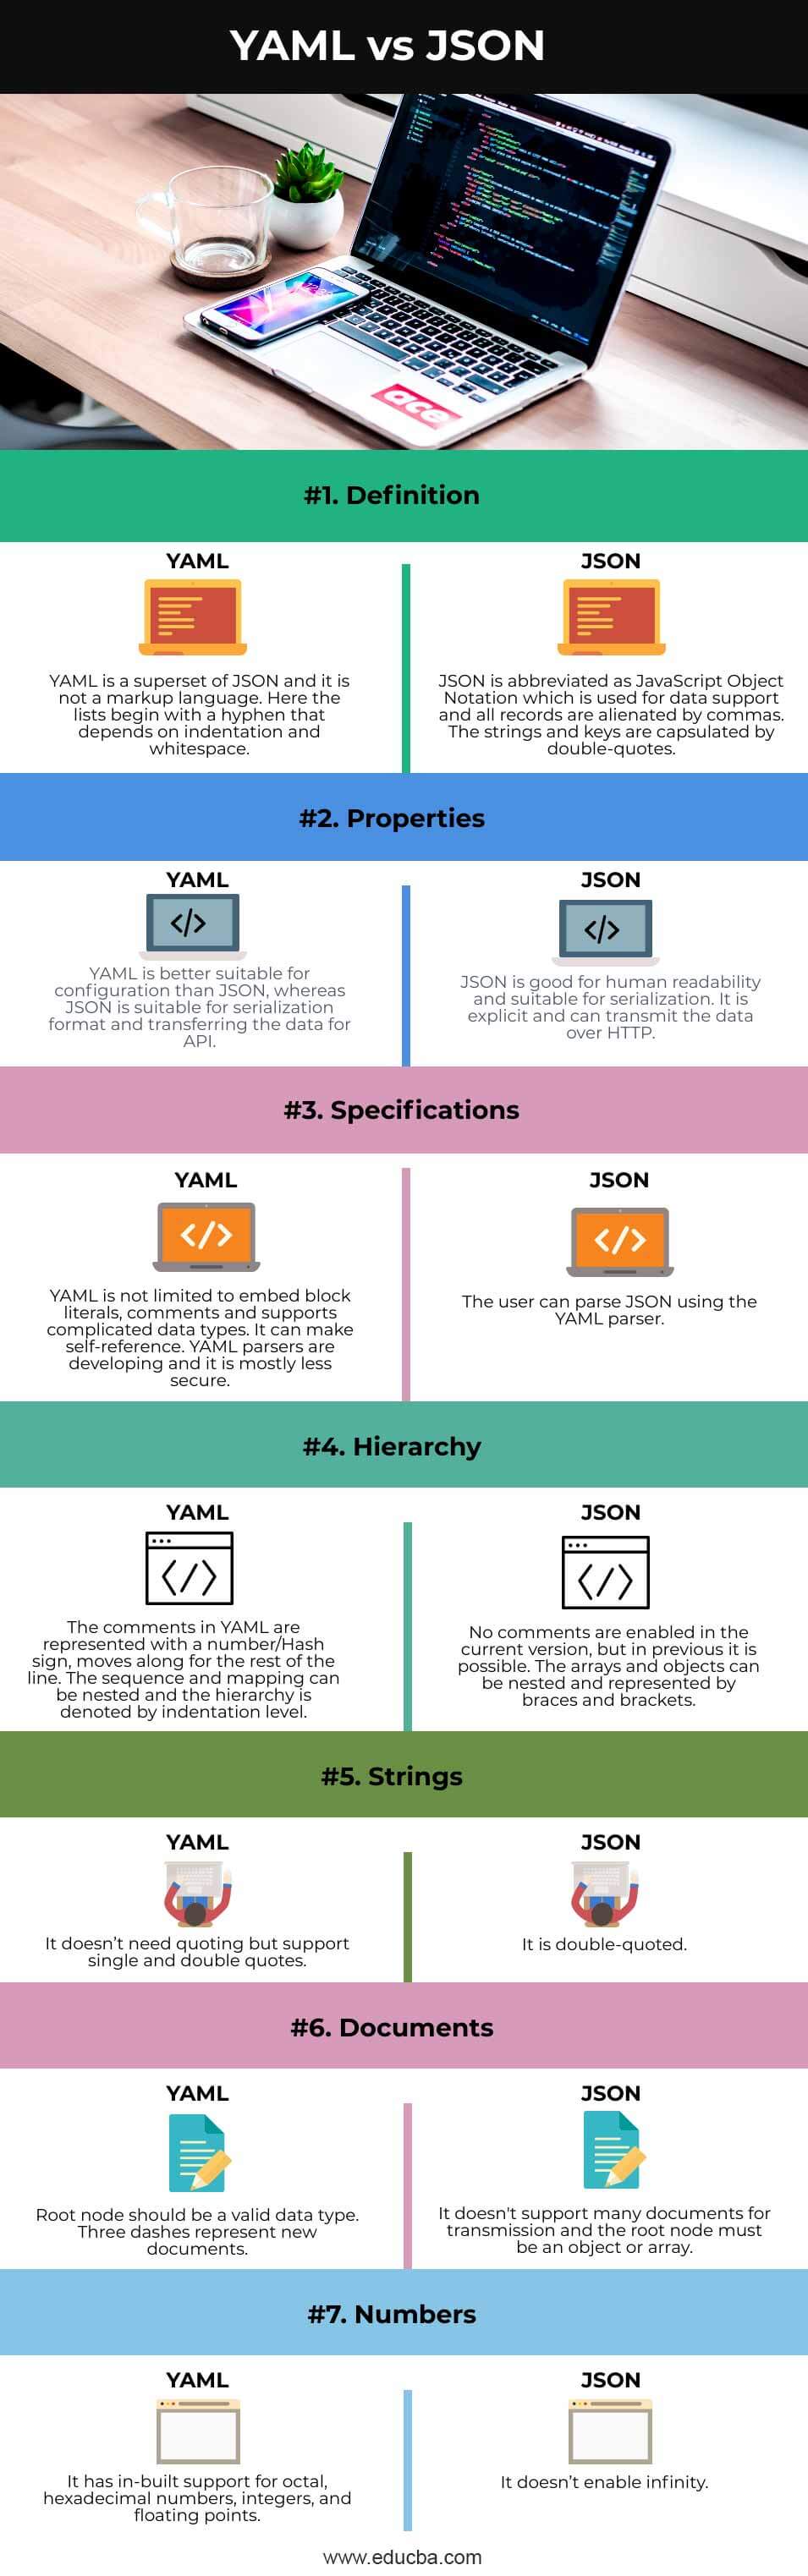 YAML-vs-JSON-info